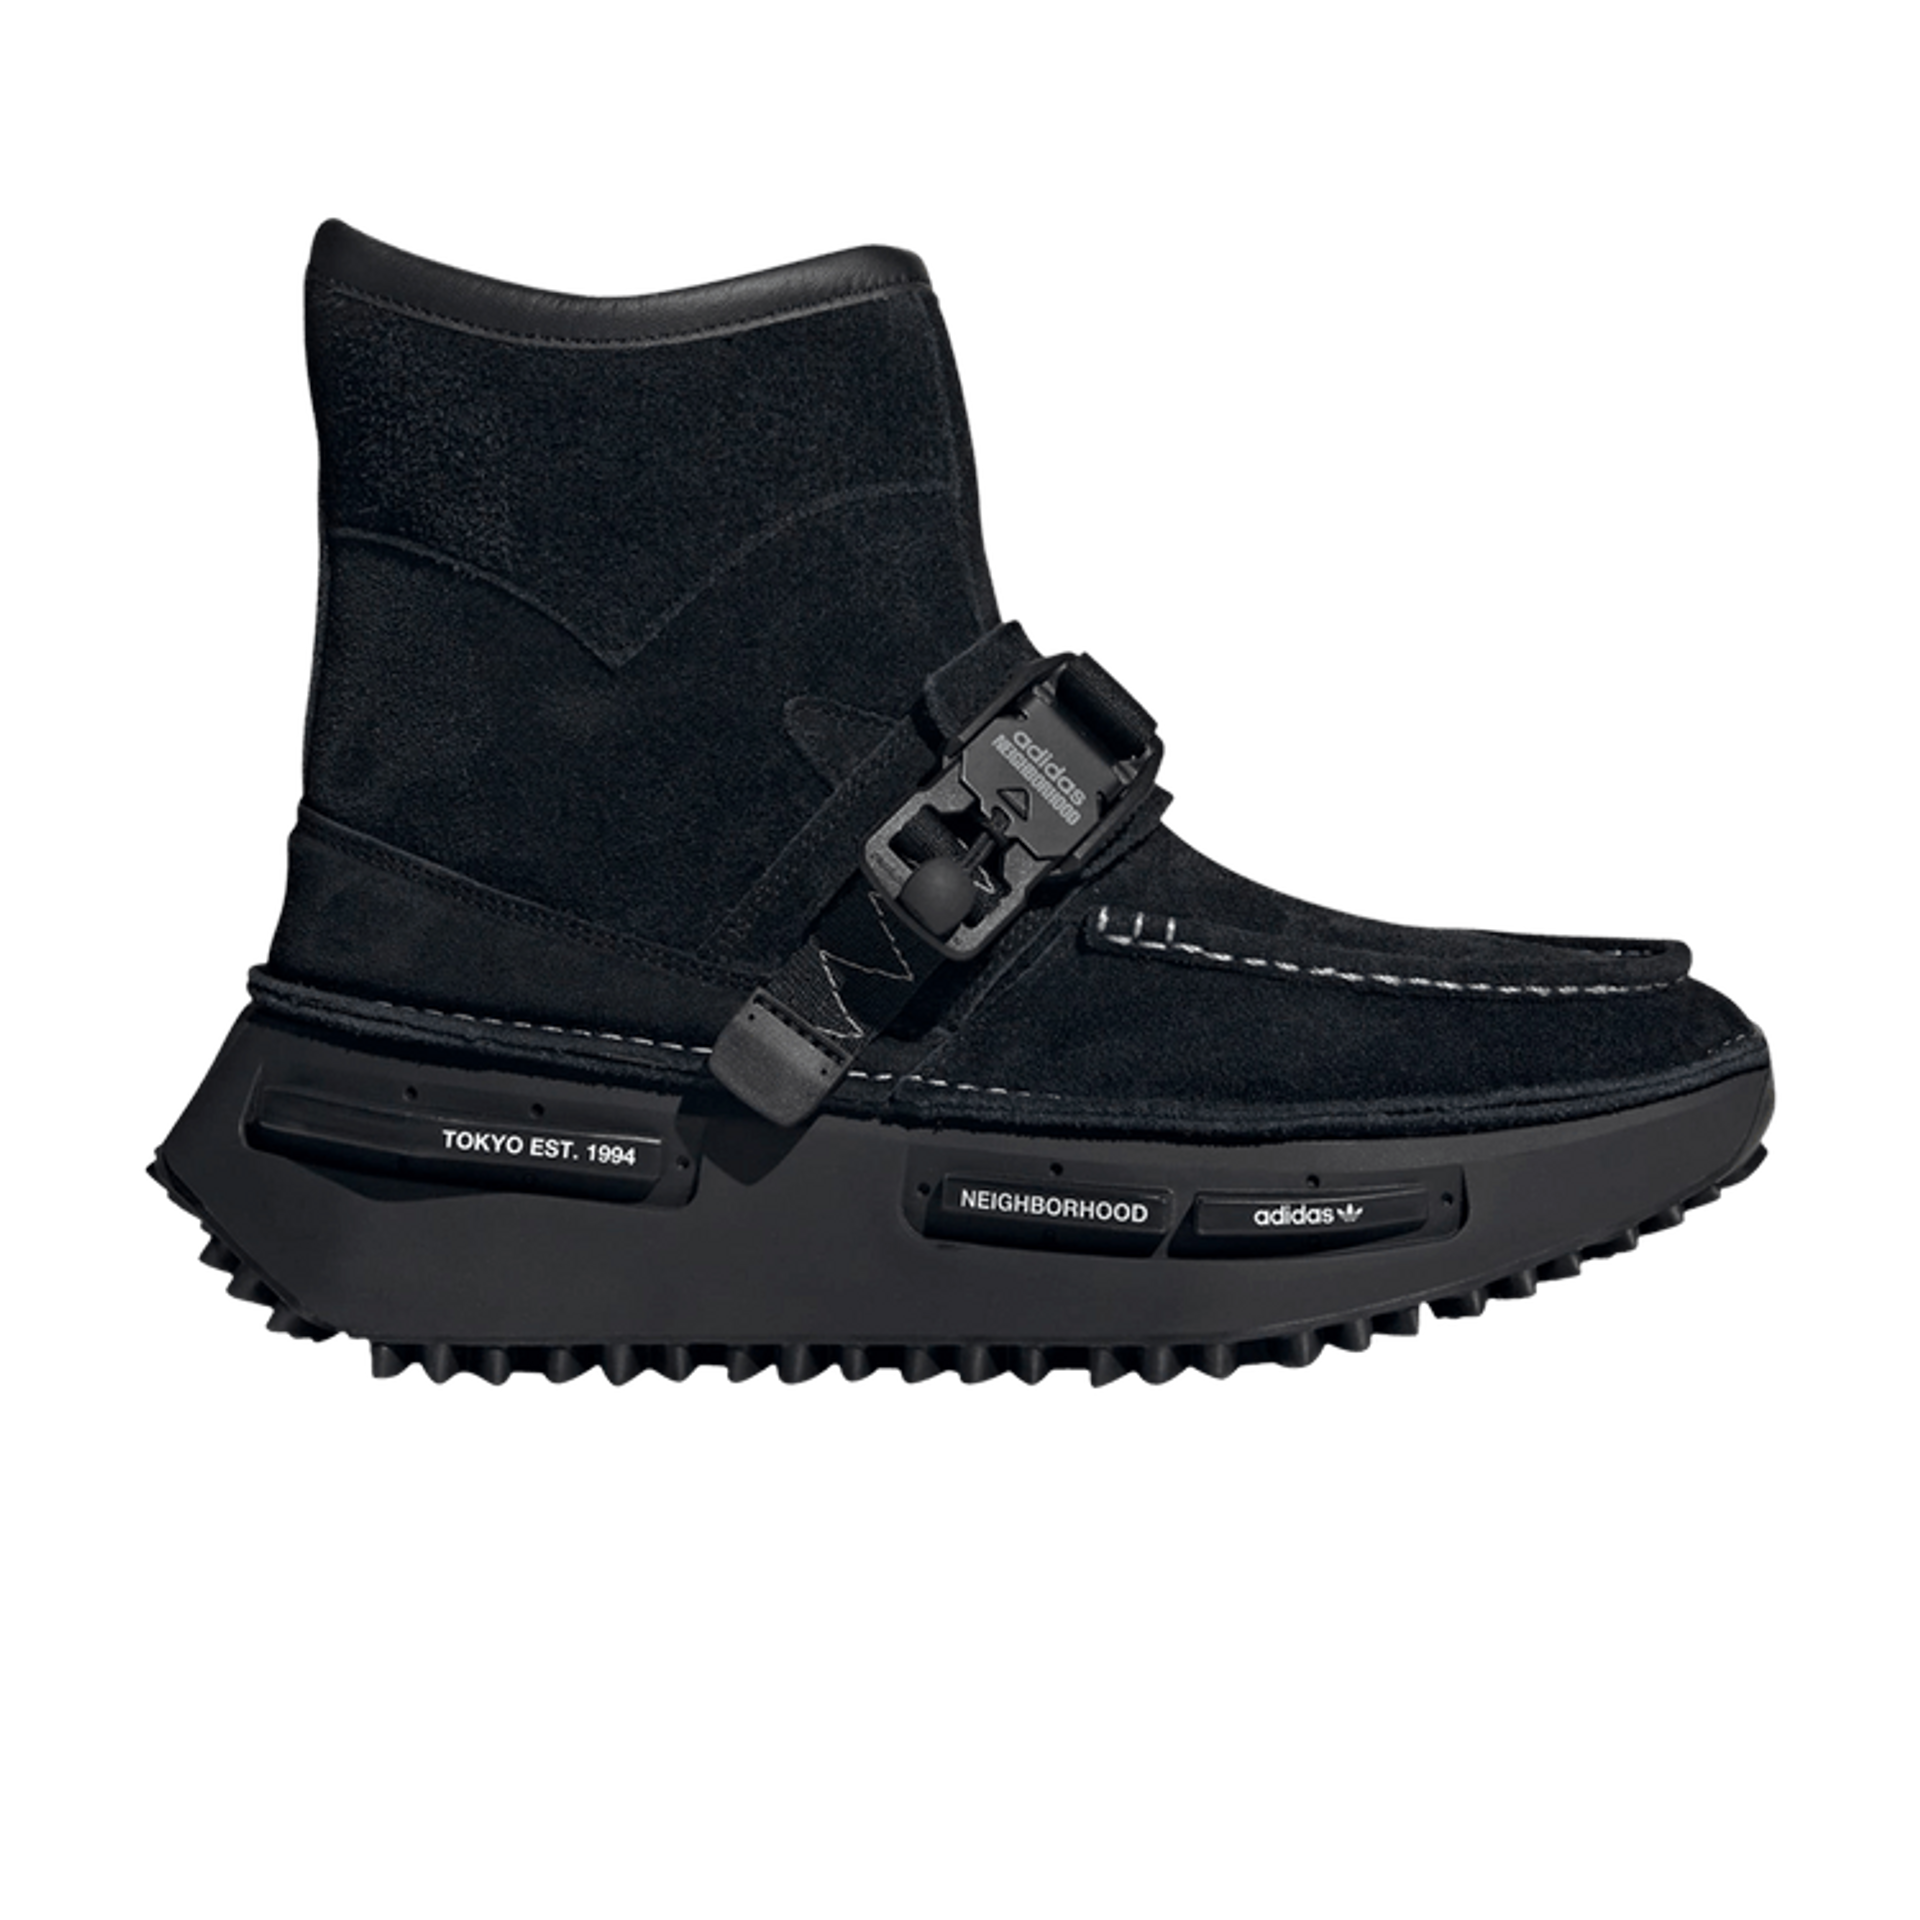 Neighborhood x adidas NMD_S1 Boots 'Black'